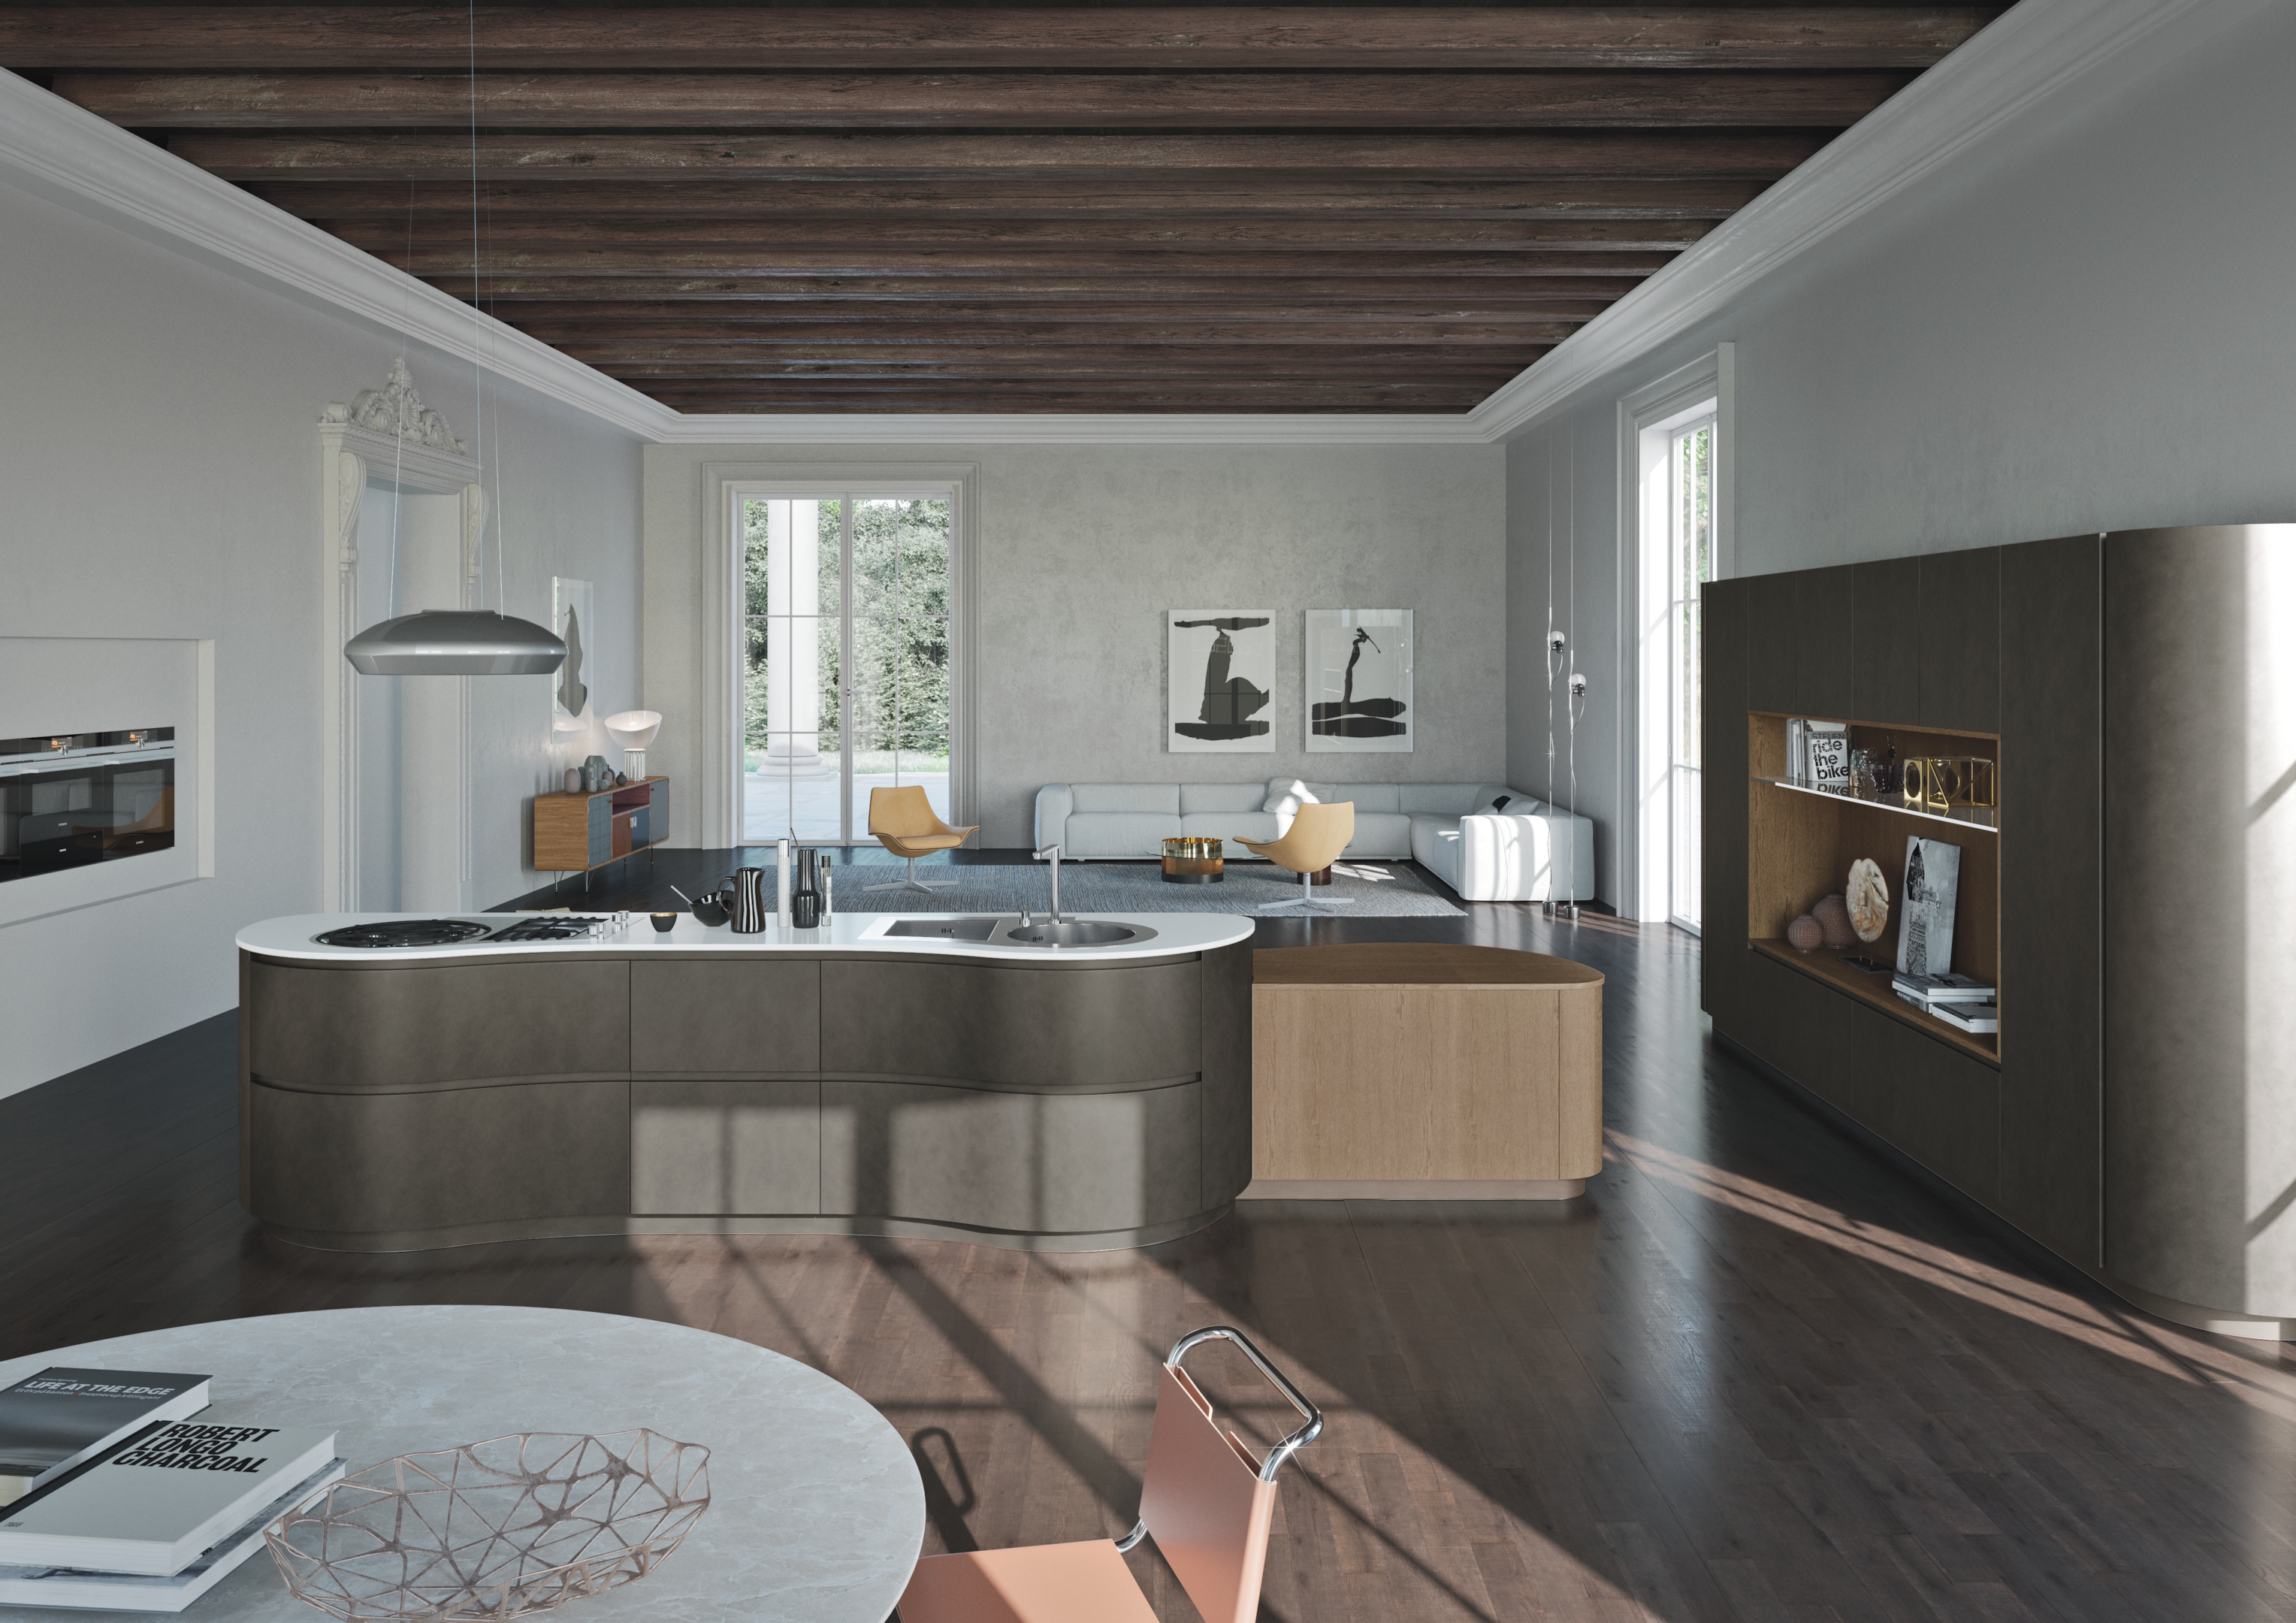 Exquisite kitchen with unique designs - Pedini Miami